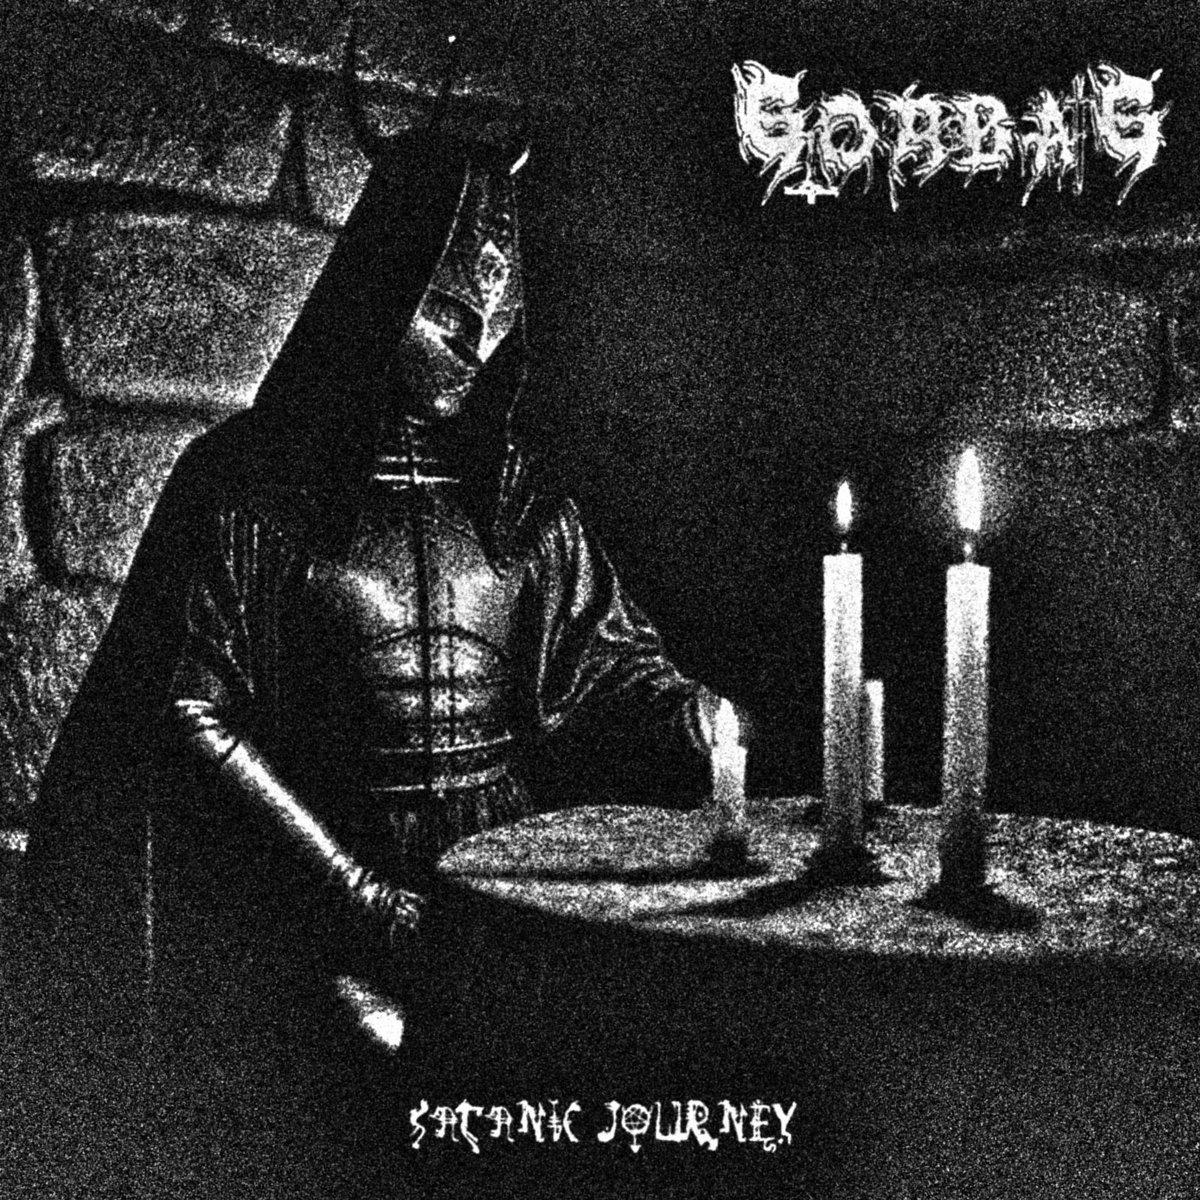 Gorbag - In uscita il singolo "Satanic Journey"